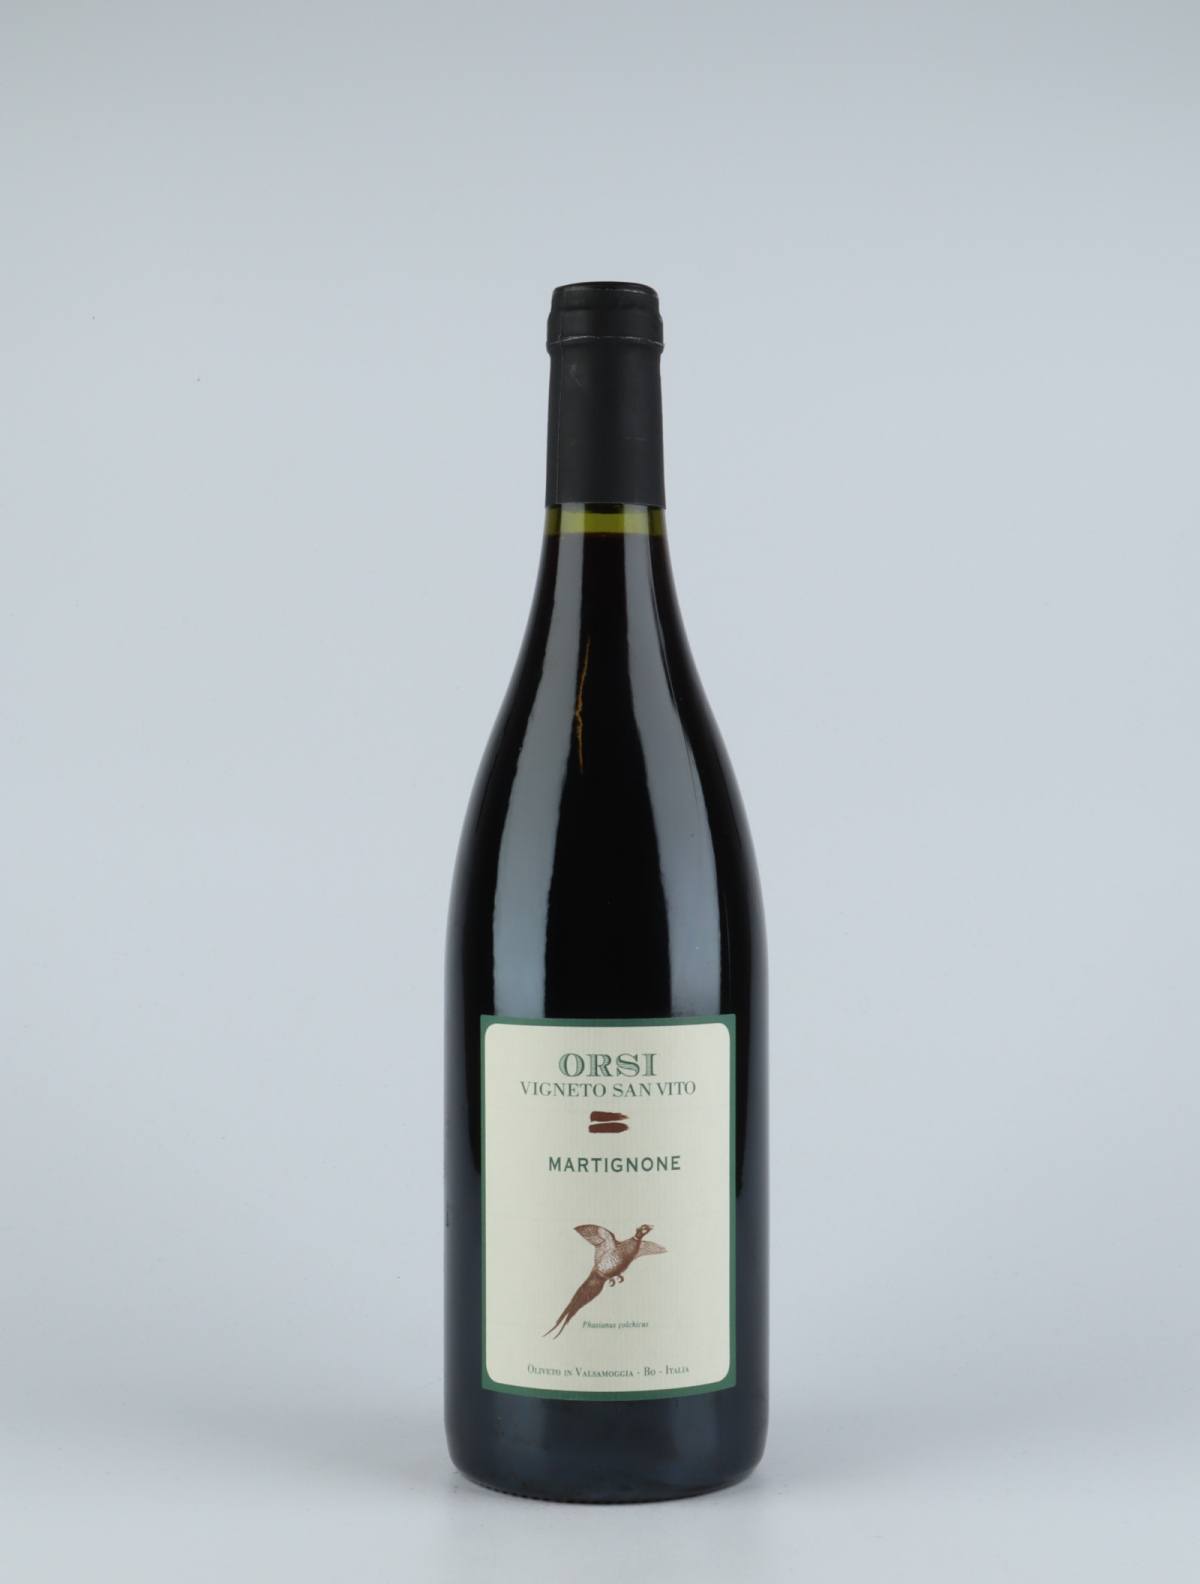 En flaske 2017 Martignone Rødvin fra Orsi - San Vito, Emilia-Romagna i Italien